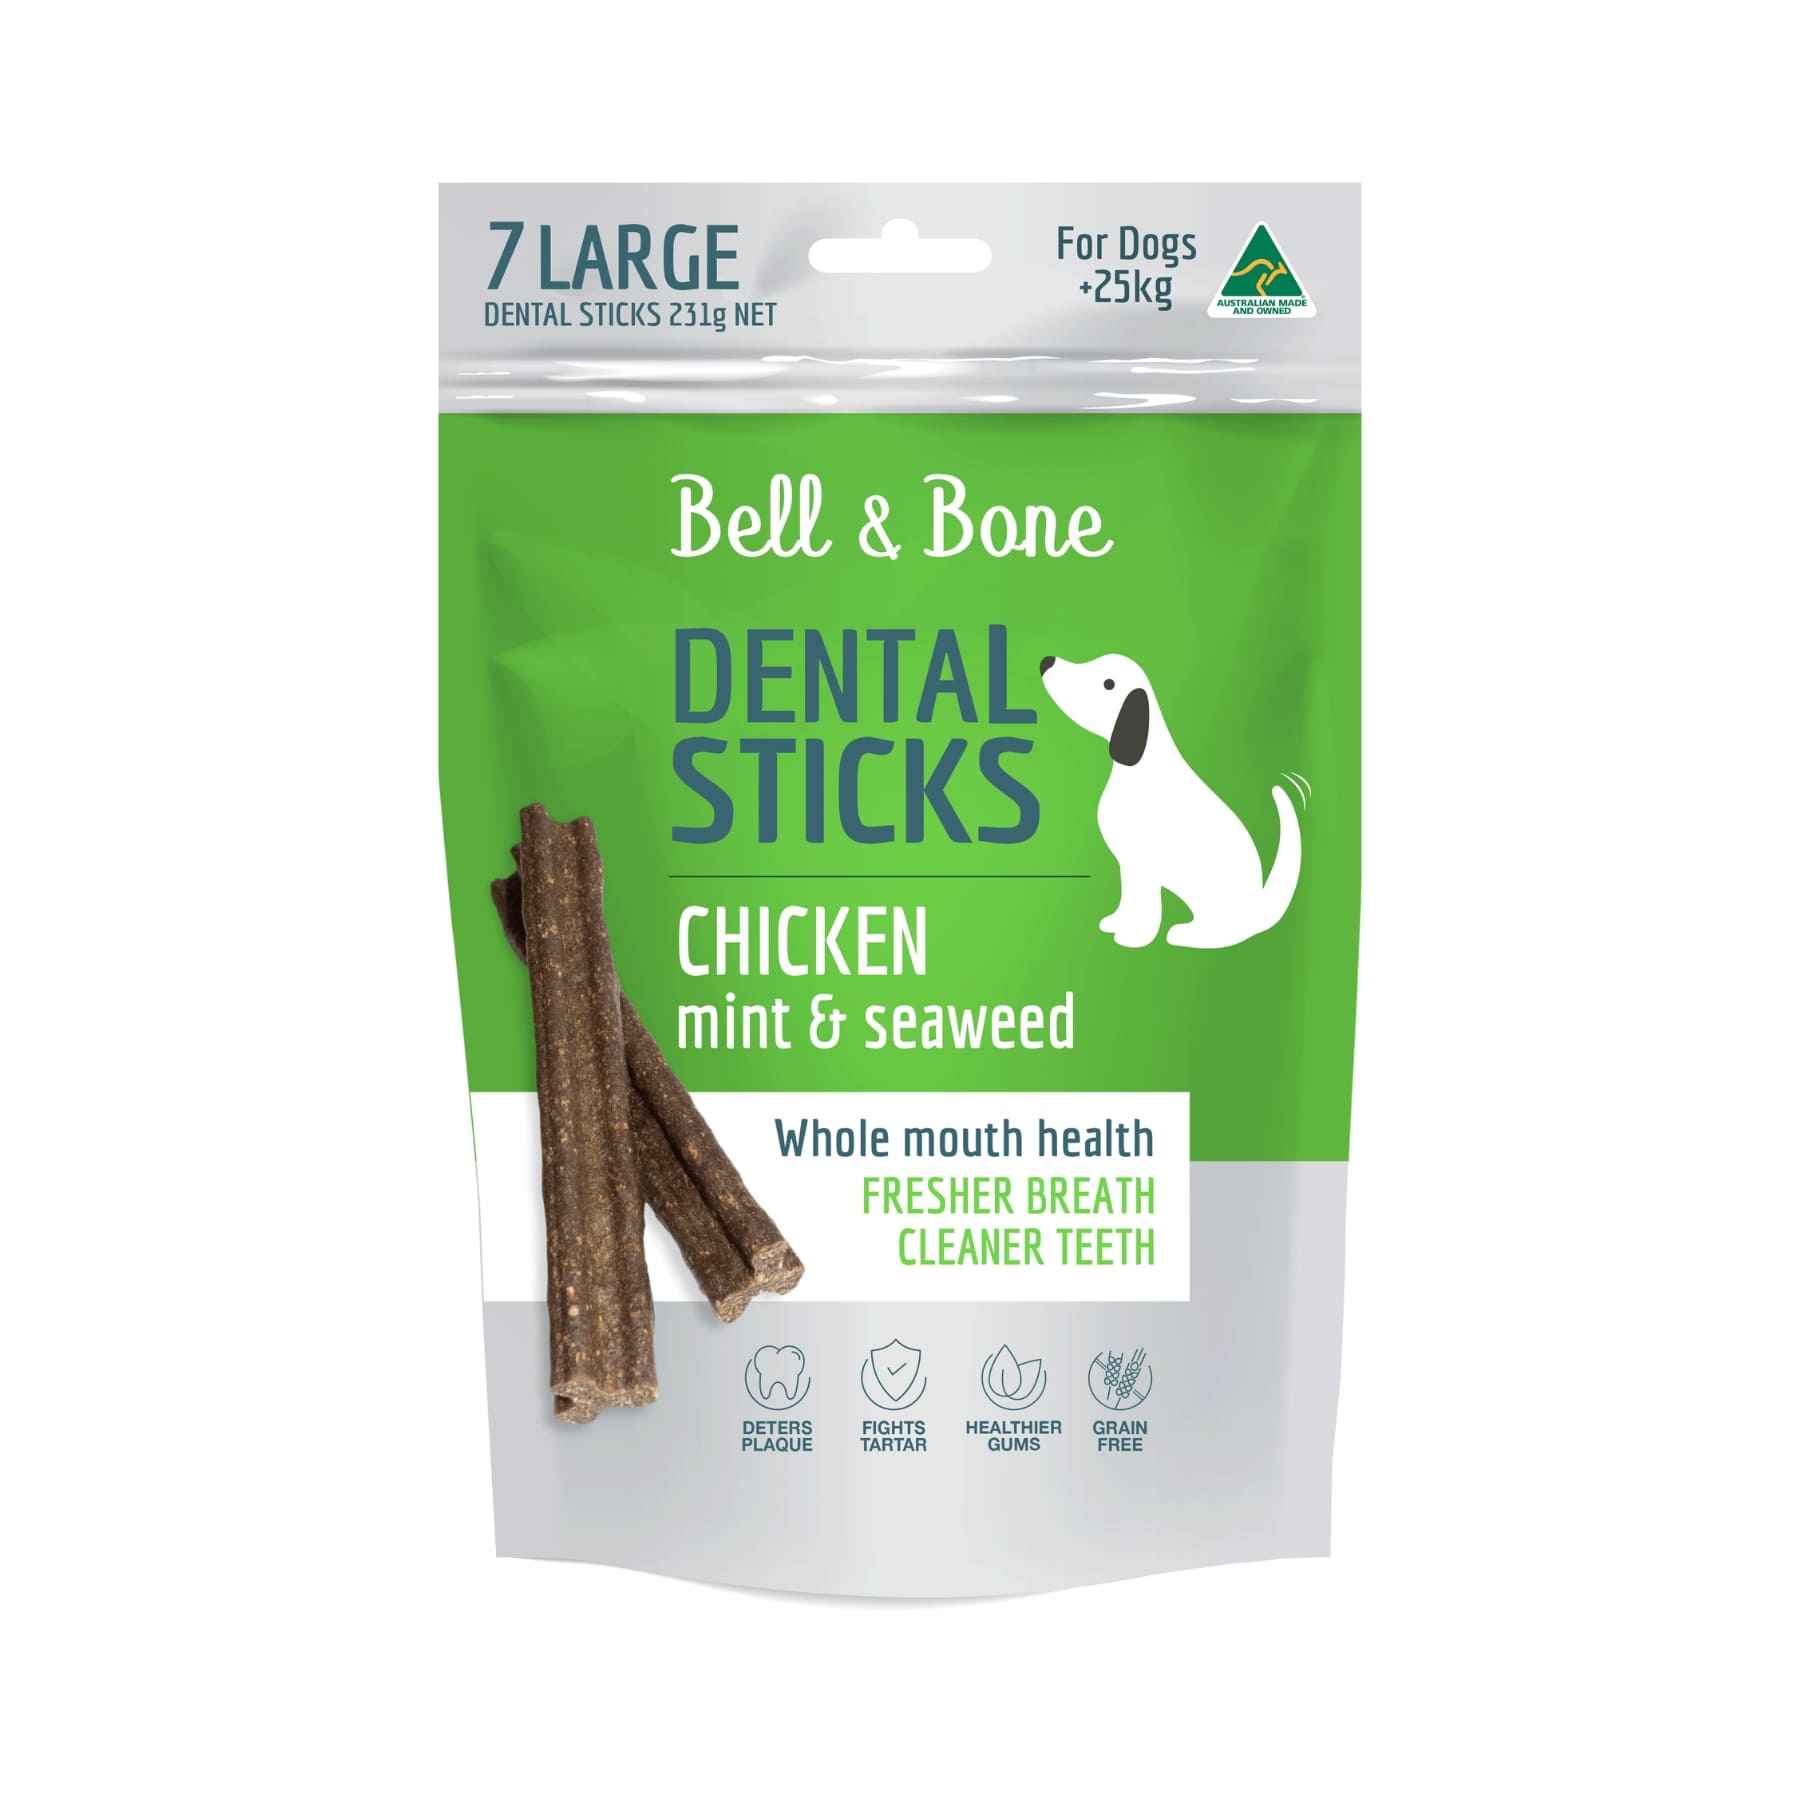 Bell & Bone Dental Sticks Chicken, Mint & Seaweed. Dental Treats for Large Dogs Over 25kg